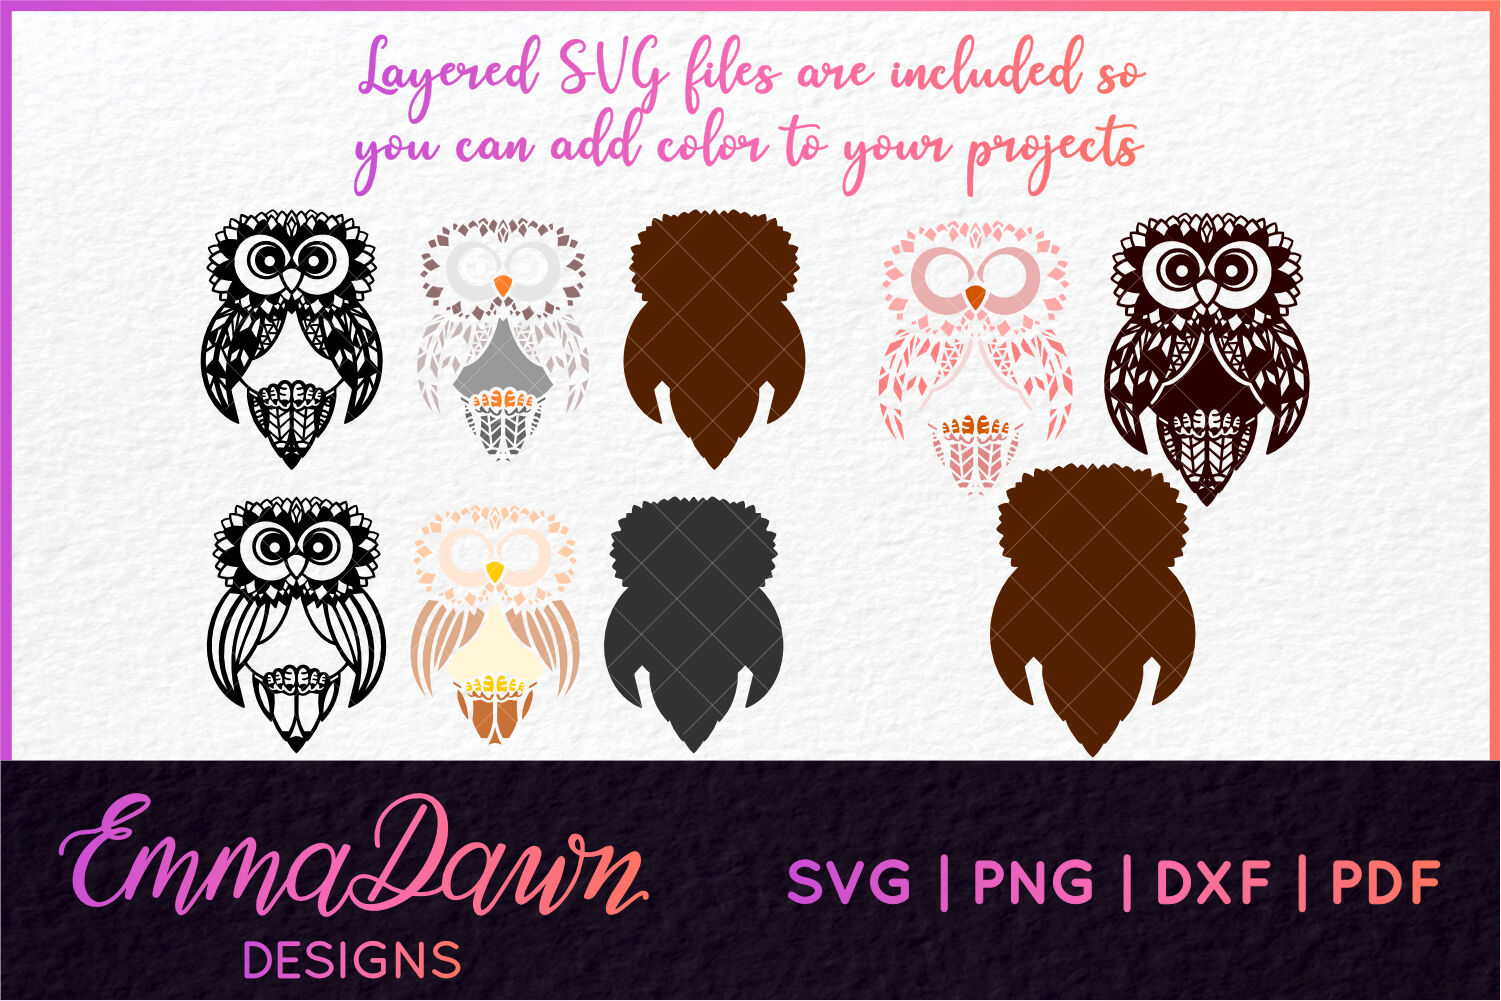 Download Anne The Fluffy Owl Mandala Zentangle Design Svg By Emma Dawn Designs Thehungryjpeg Com